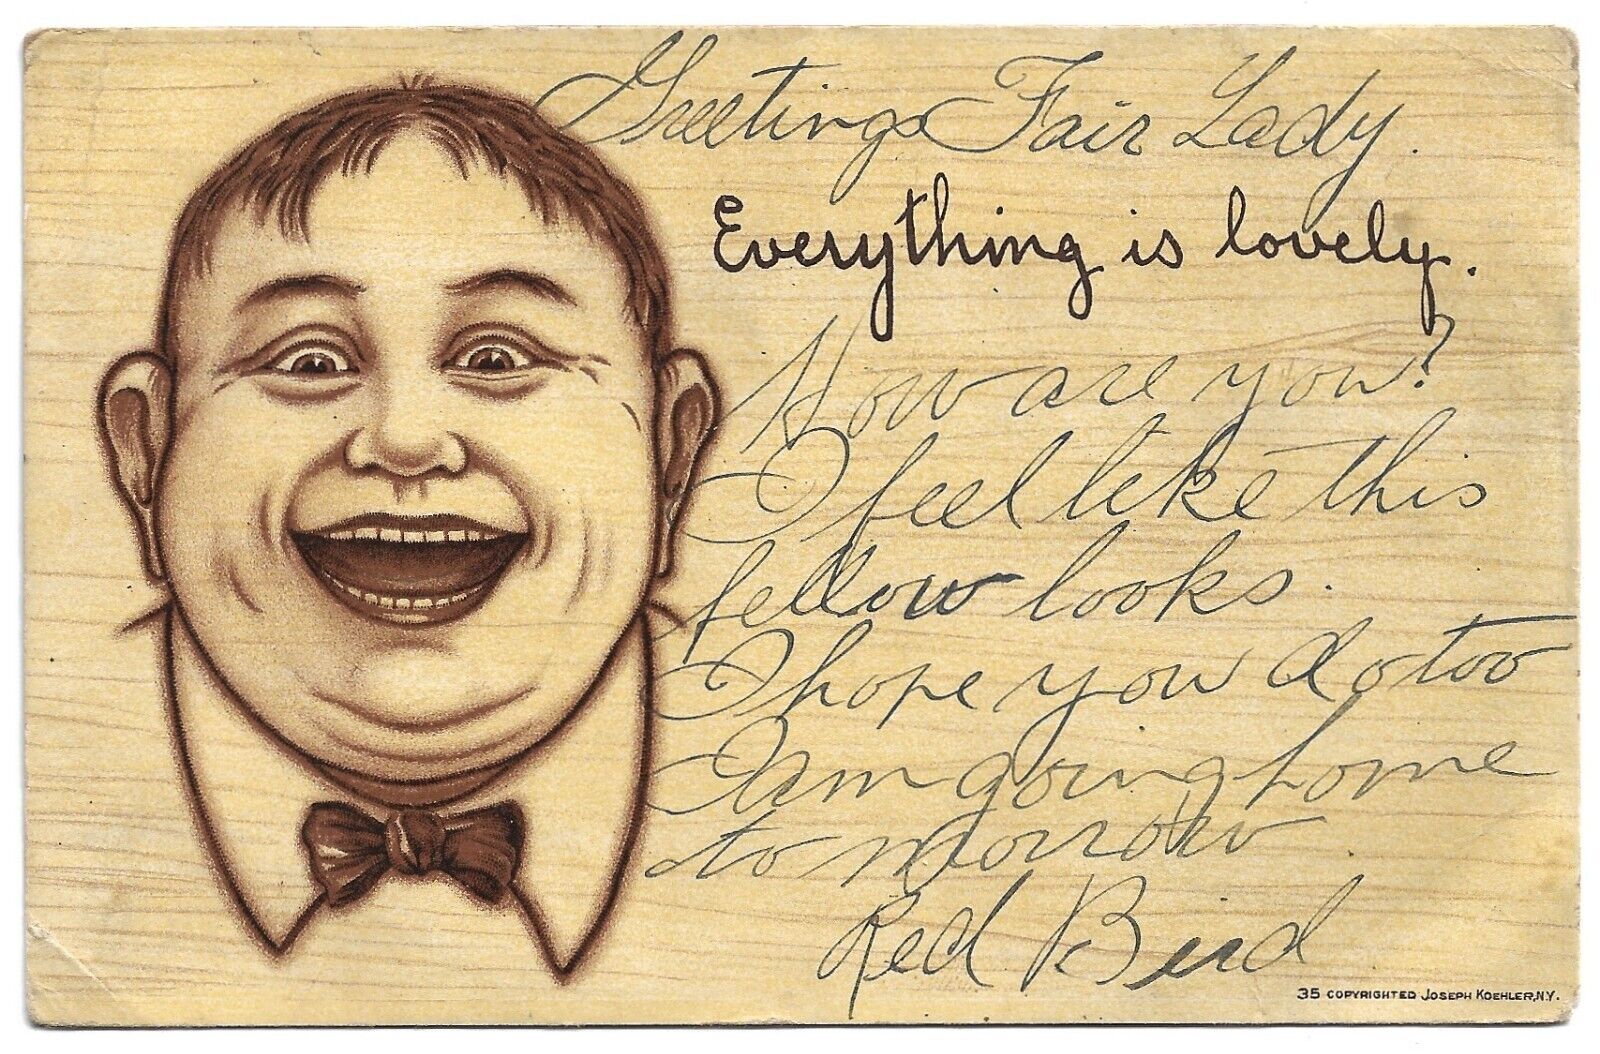 Smiling Man with Bowtie Faux Wood Joseph Koehler 1905 Vintage Comic Postcard